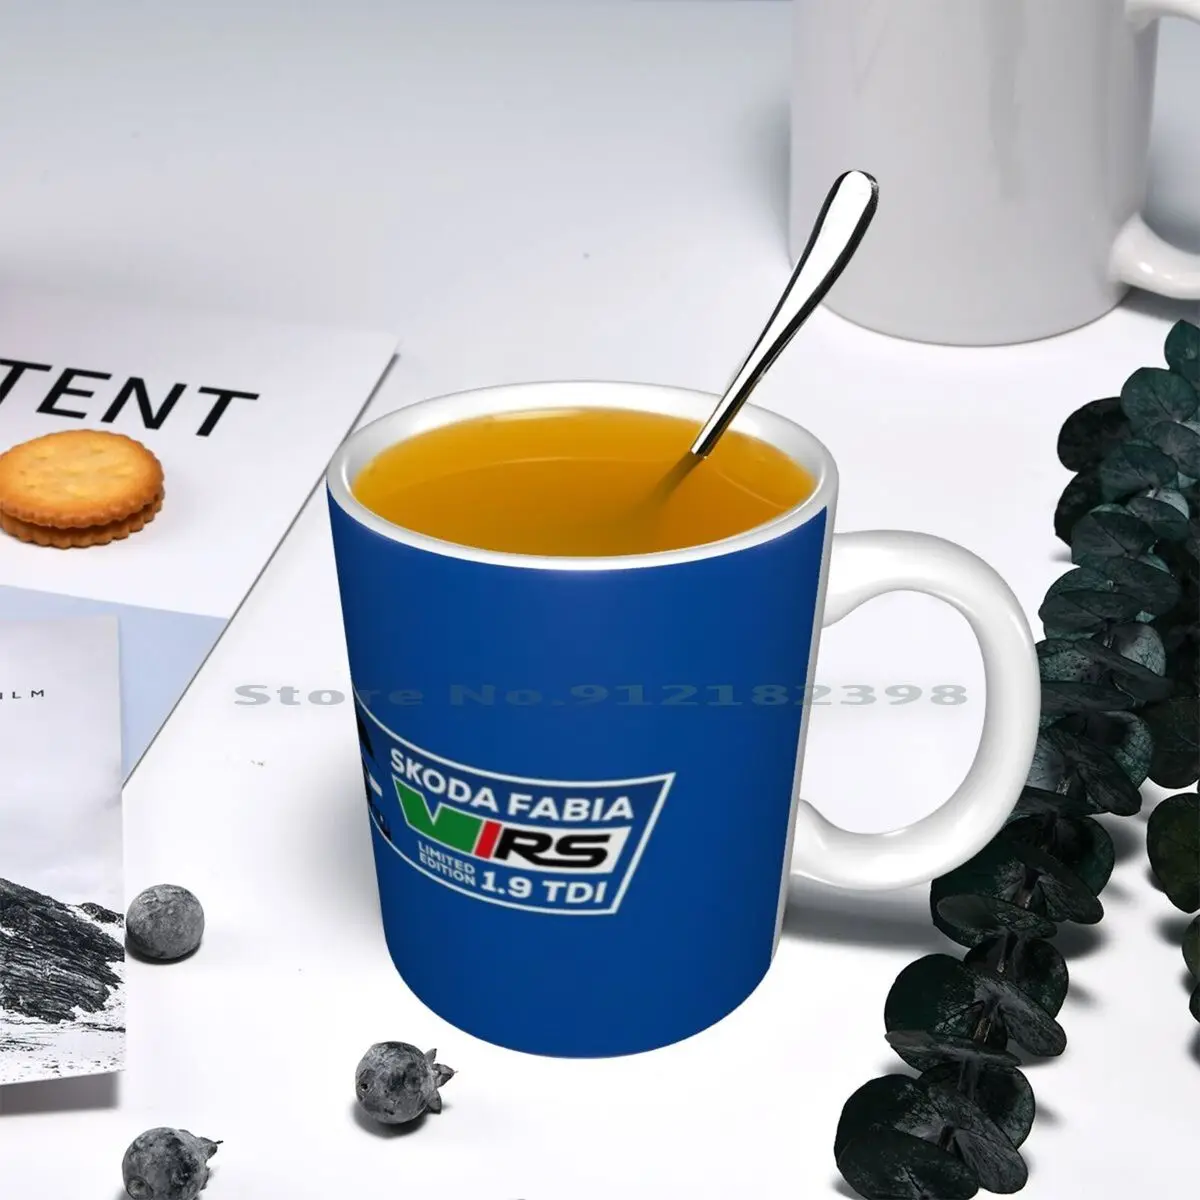 Skoda Fabia Vrs Limited Edition-Slim Landscape Ceramic Mugs Coffee Cups Milk Tea Mug Skoda Vrs Skoda Fabia Vrs Fabia Vrs Skoda images - 6